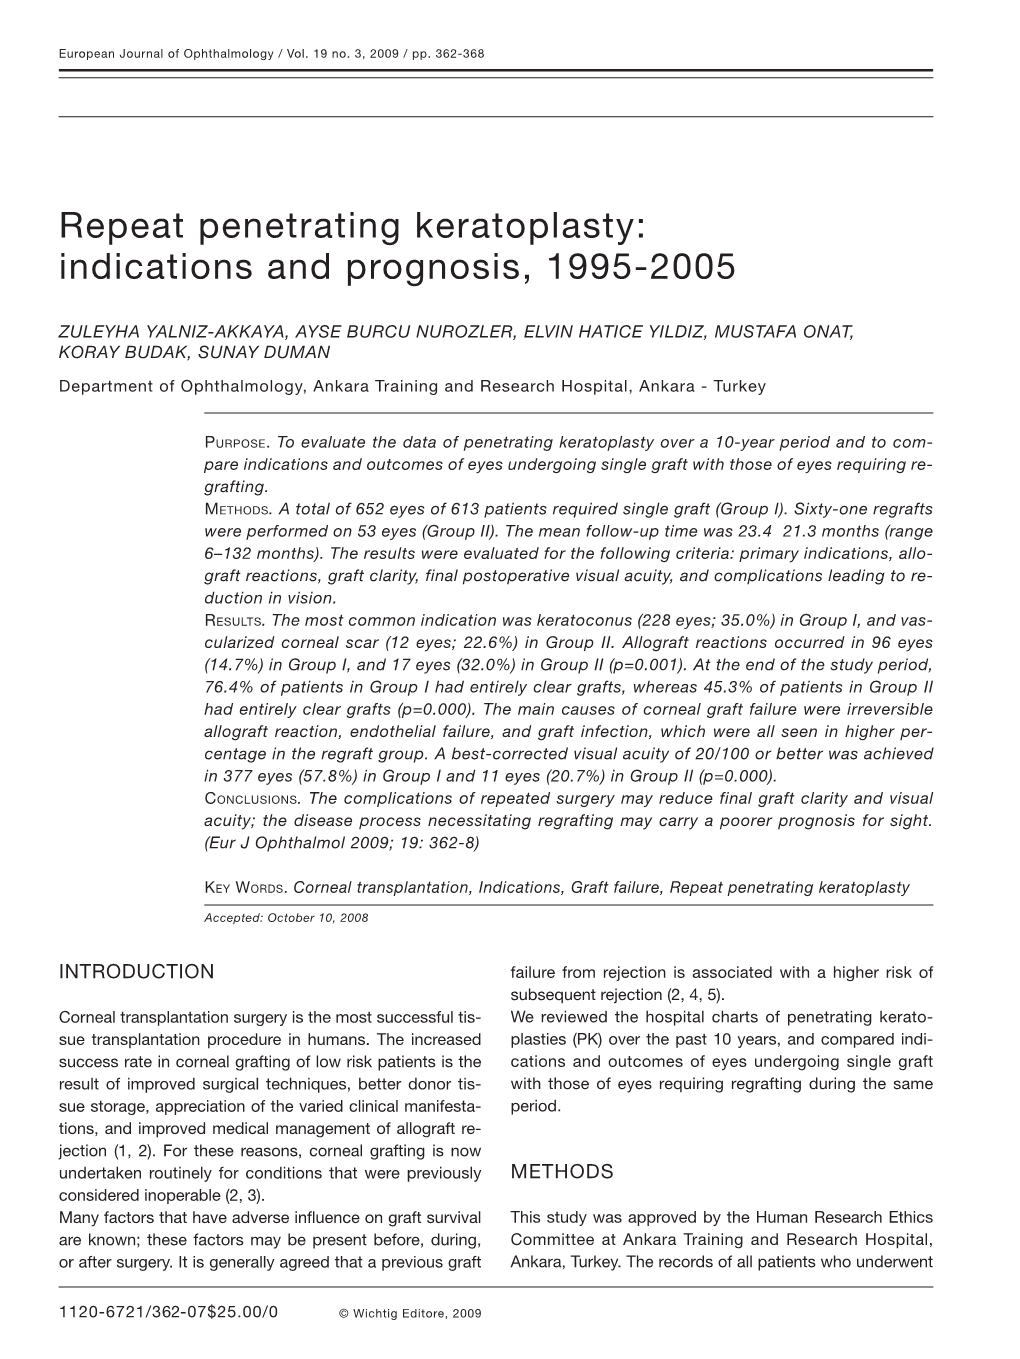 Repeat Penetrating Keratoplasty: Indications and Prognosis, 1995-2005